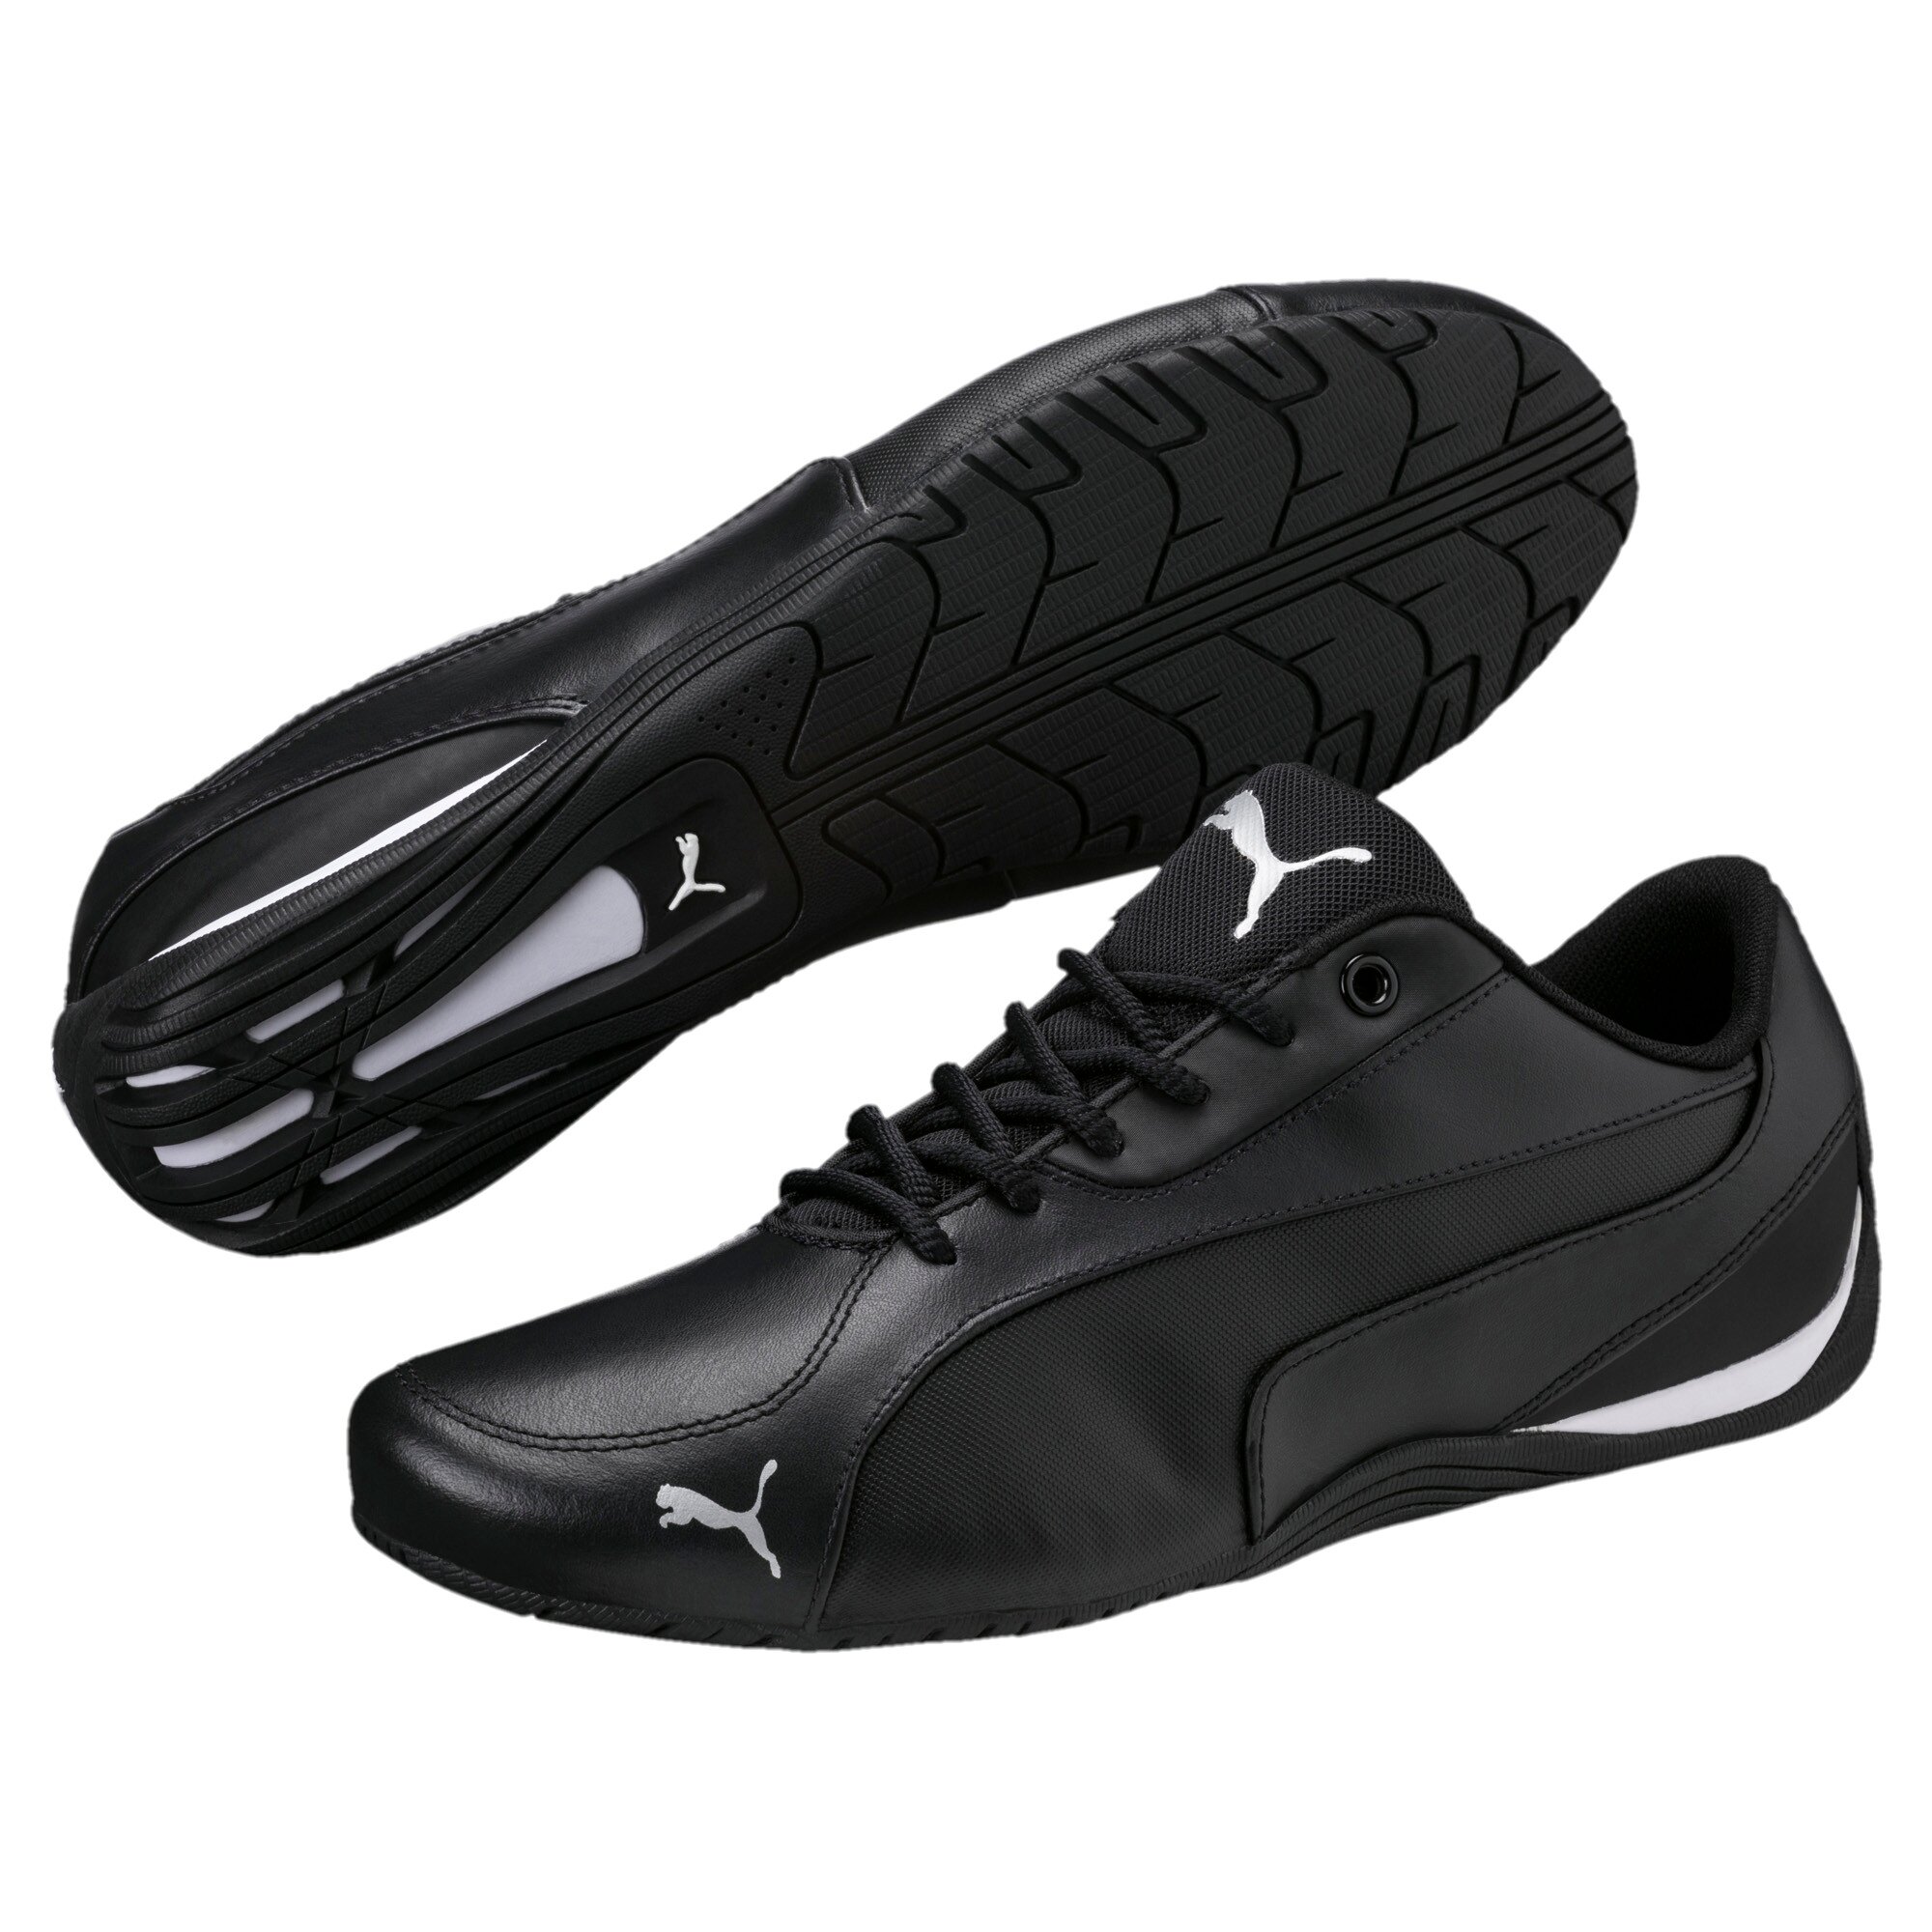 Puma Drift Cat 5 Core Men's Motorsports Style Shoes for $25.49 Shipped ...